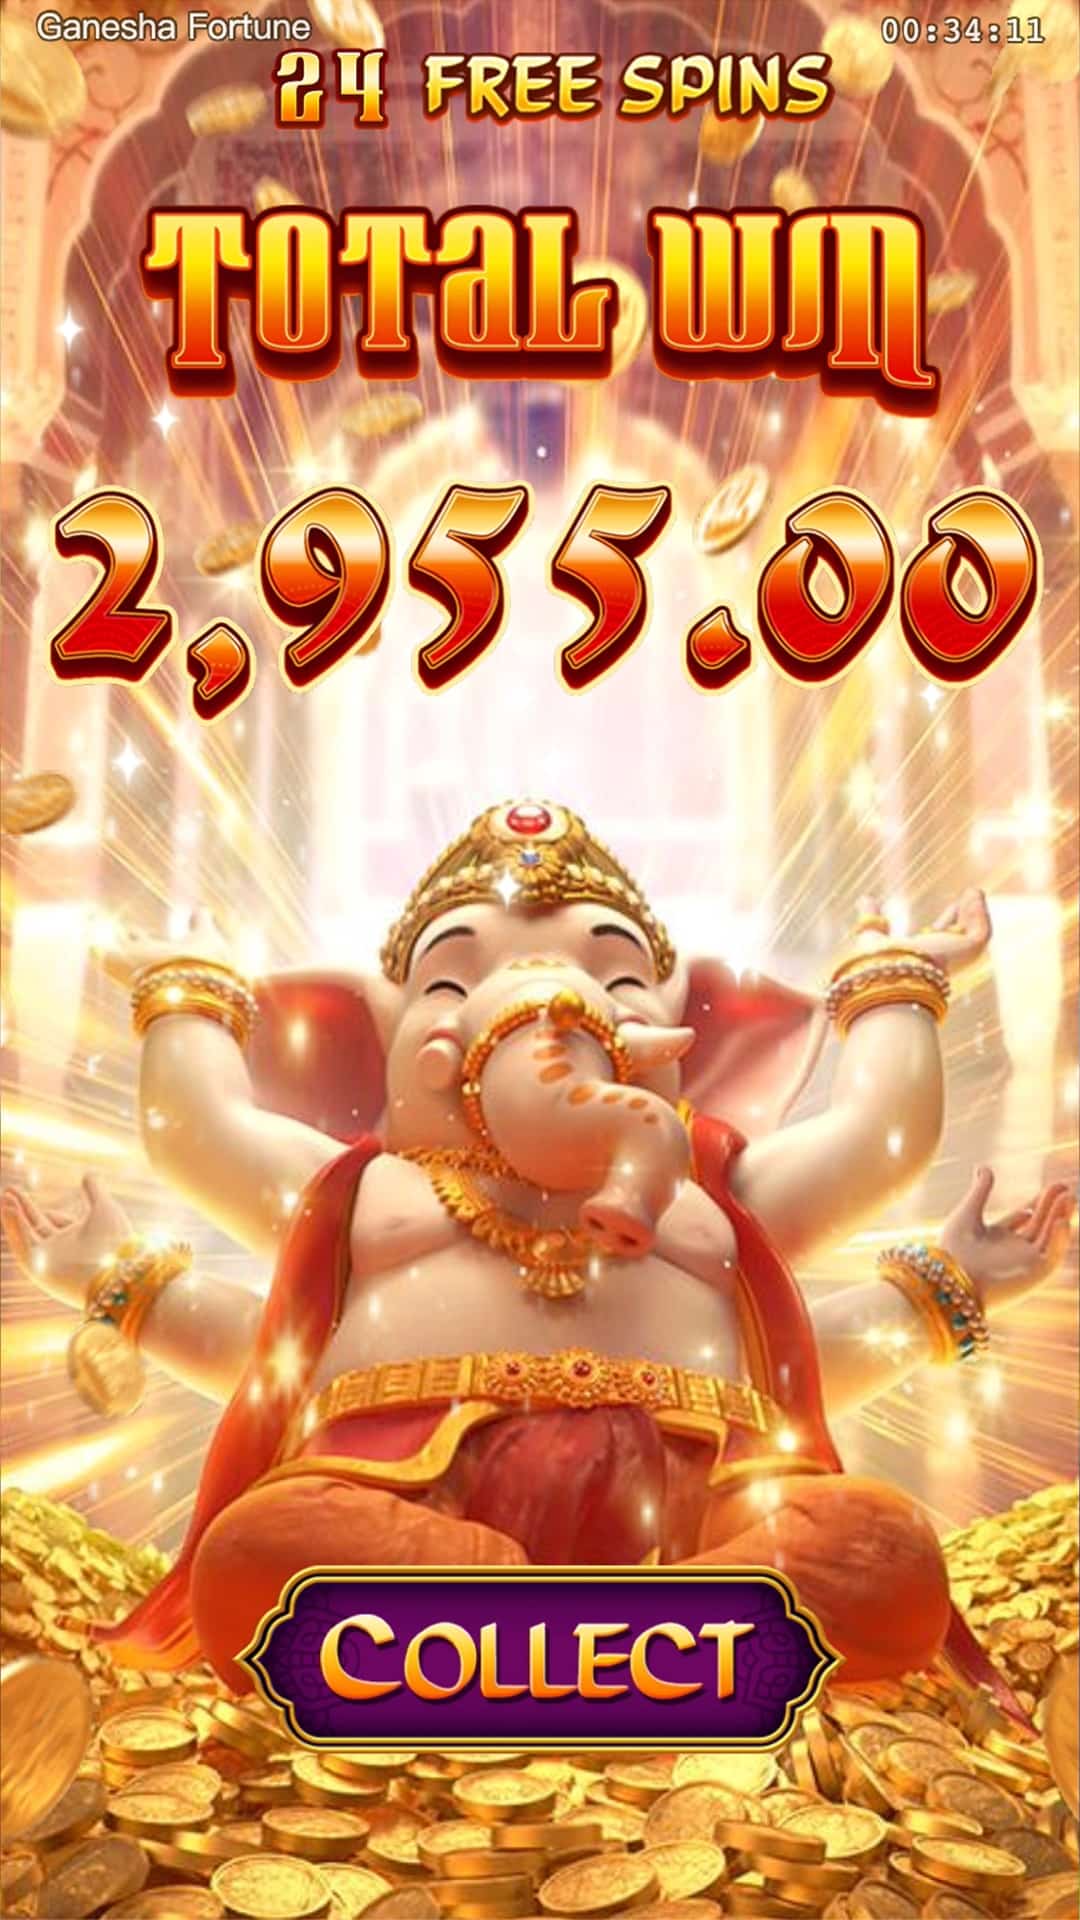 total win GaneshaFortune